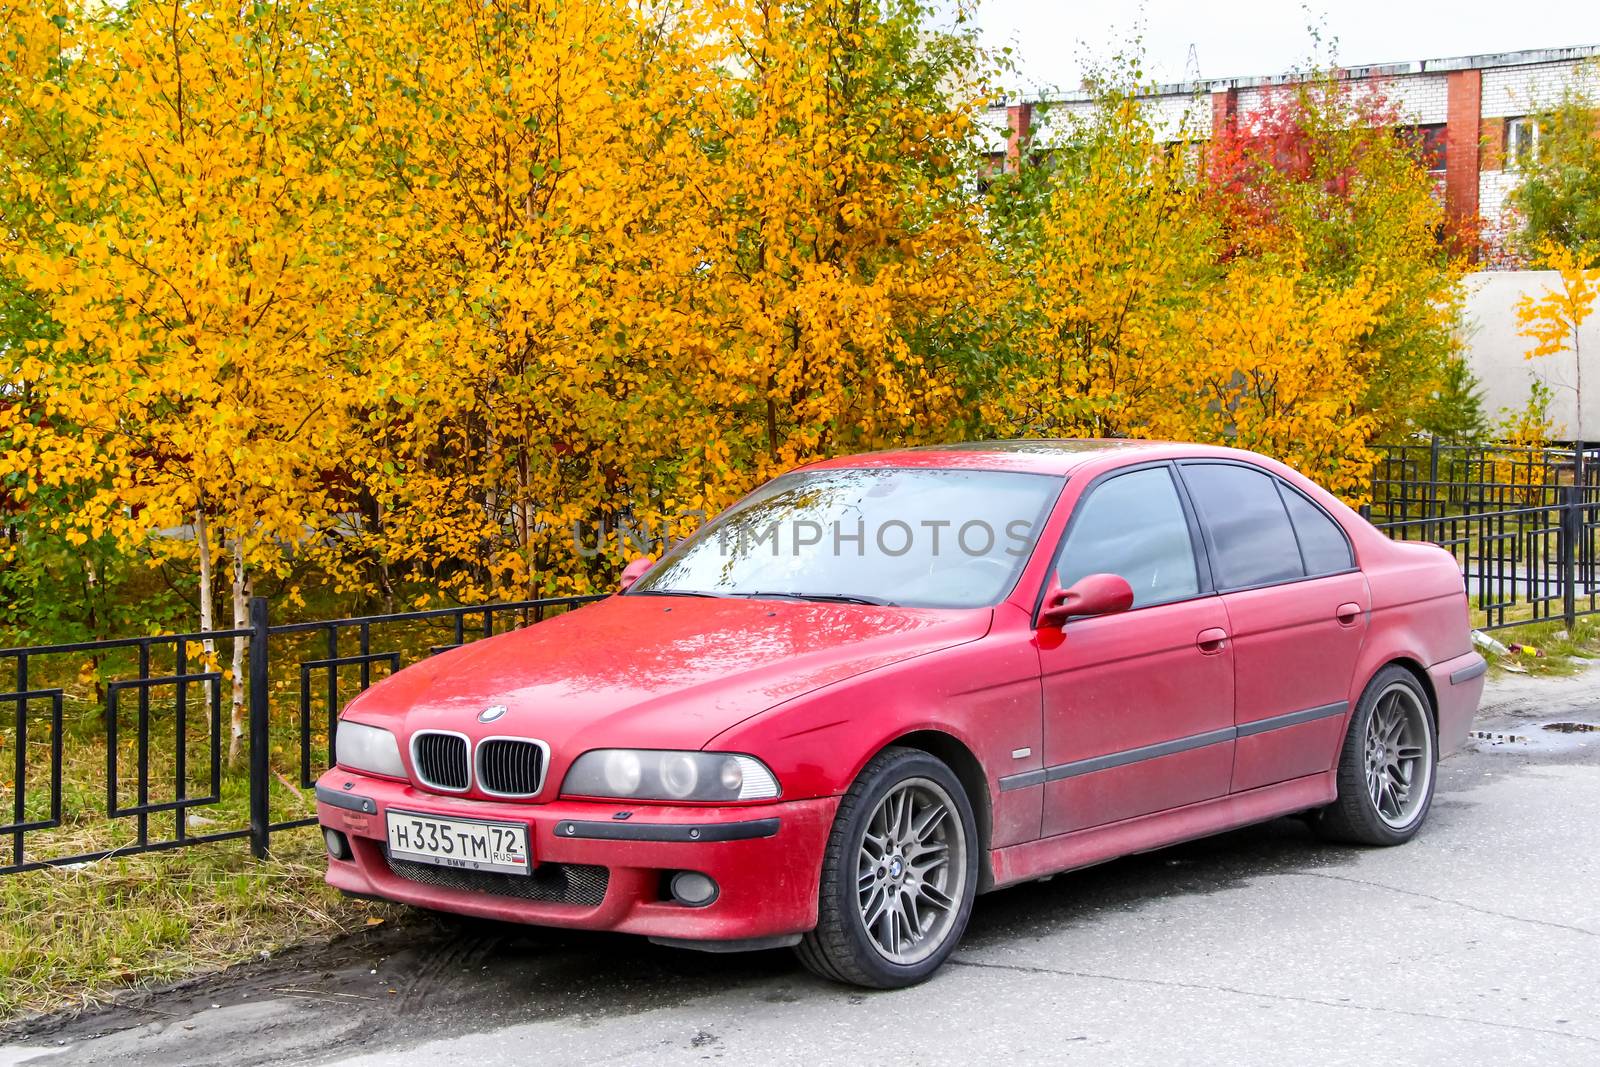 NOVYY URENGOY, RUSSIA - SEPTEMBER 8, 2012: Motor car BMW E39 M5 at the city street.